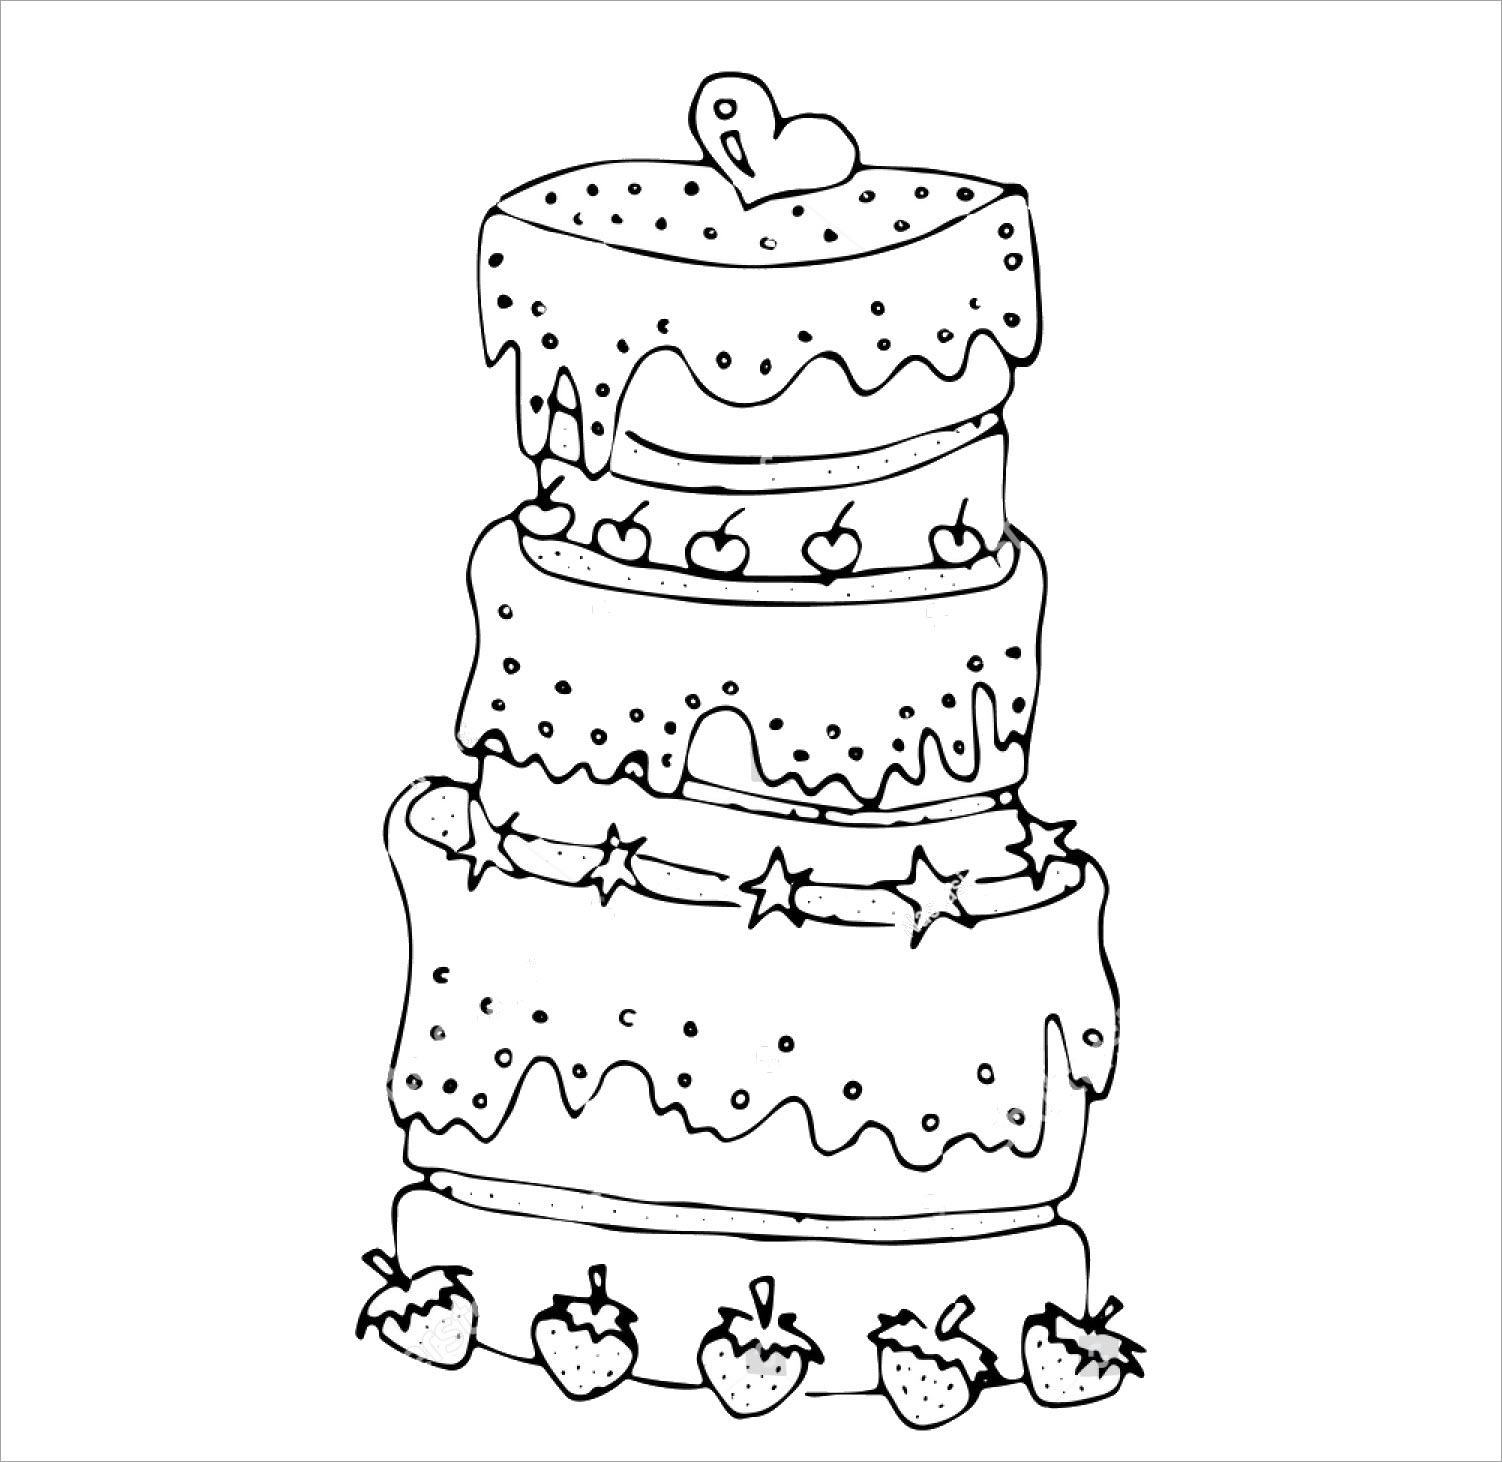 Beautiful birthday cake coloring page